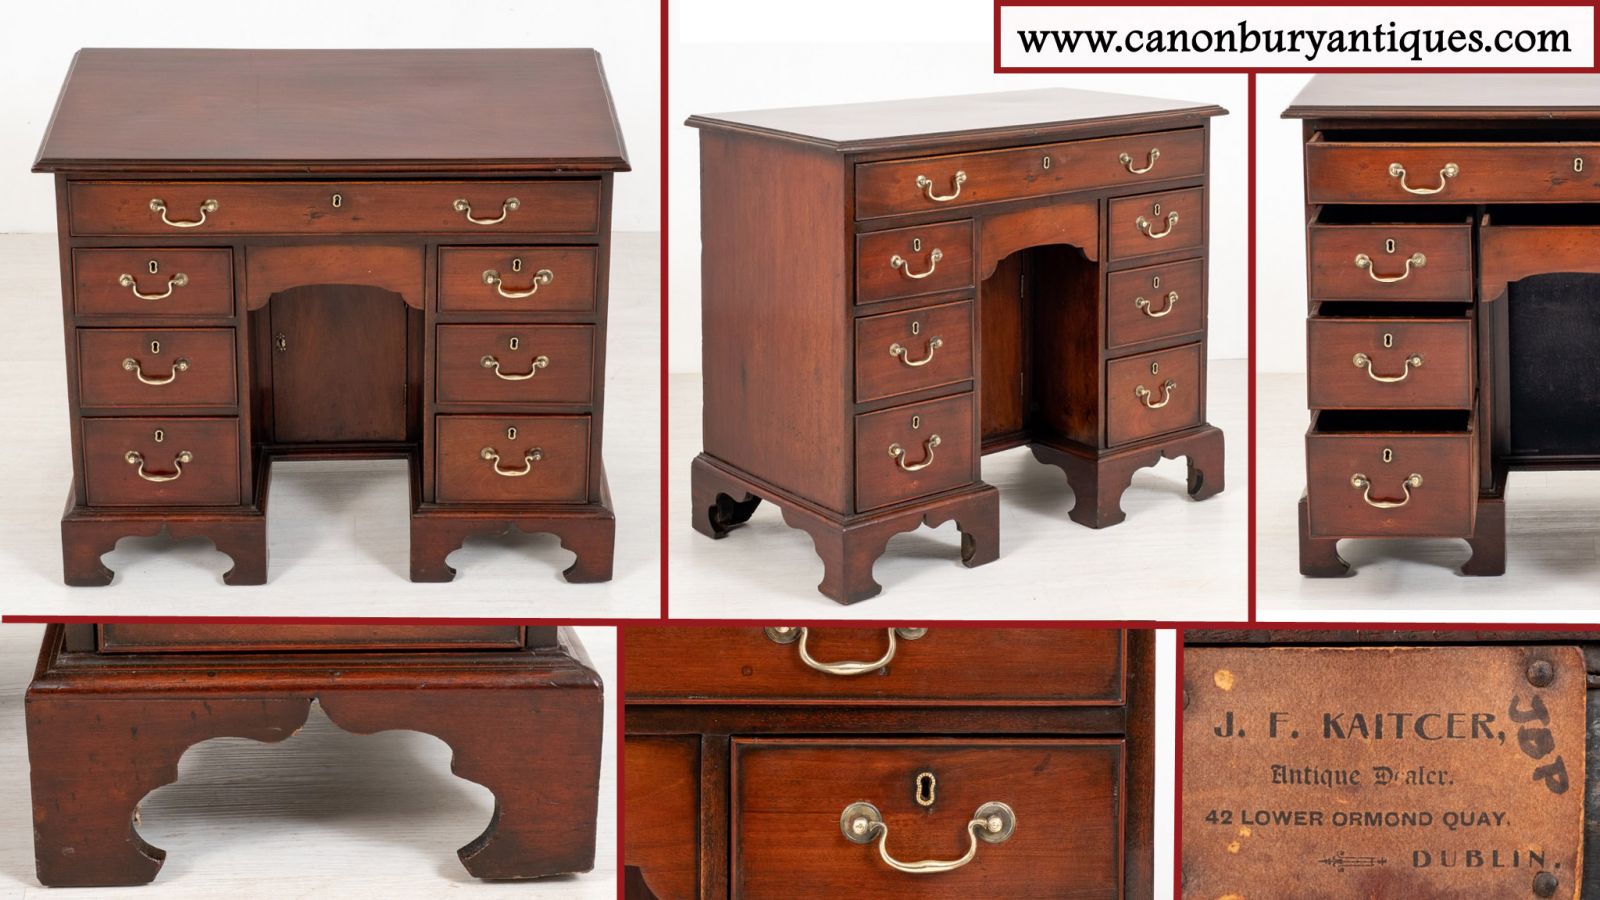 George II Kneehole Desk - Antique Bureau Mahogany